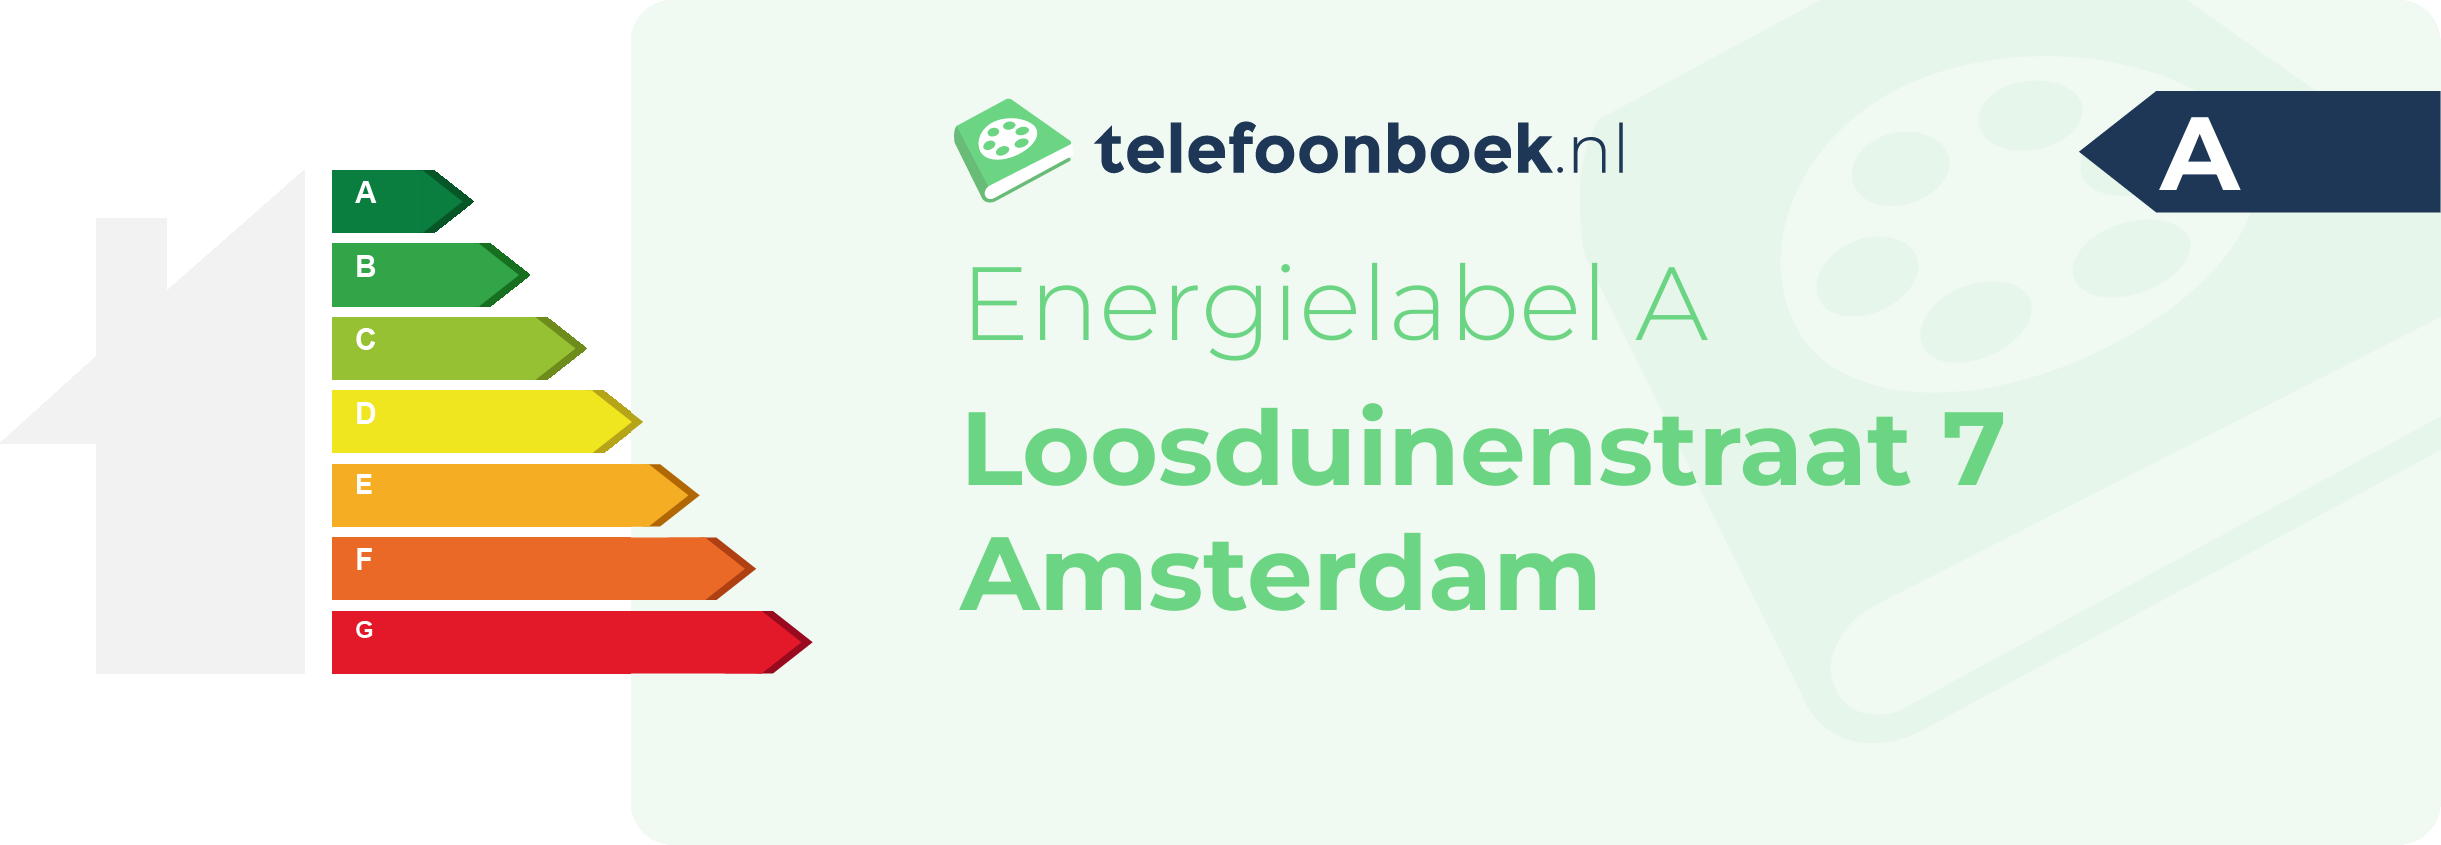 Energielabel Loosduinenstraat 7 Amsterdam